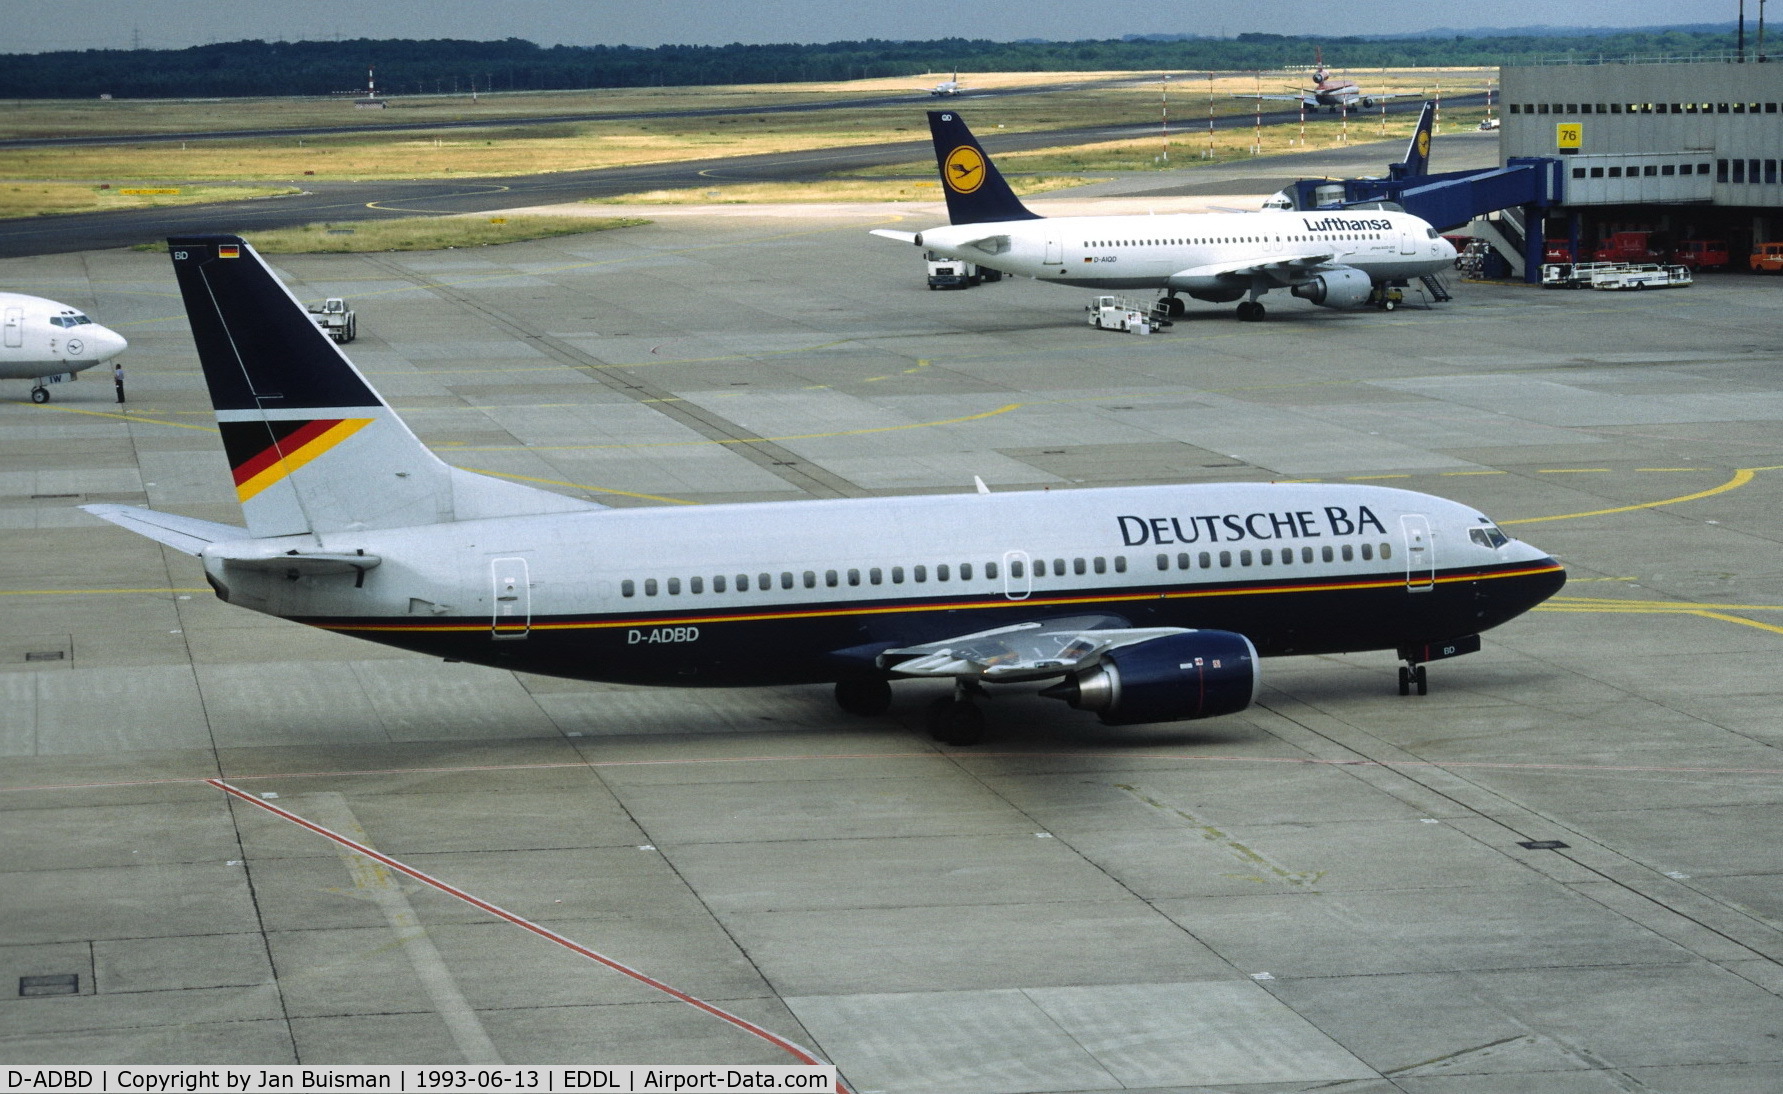 D-ADBD, 1992 Boeing 737-3L9 C/N 27061, Deutsche BA